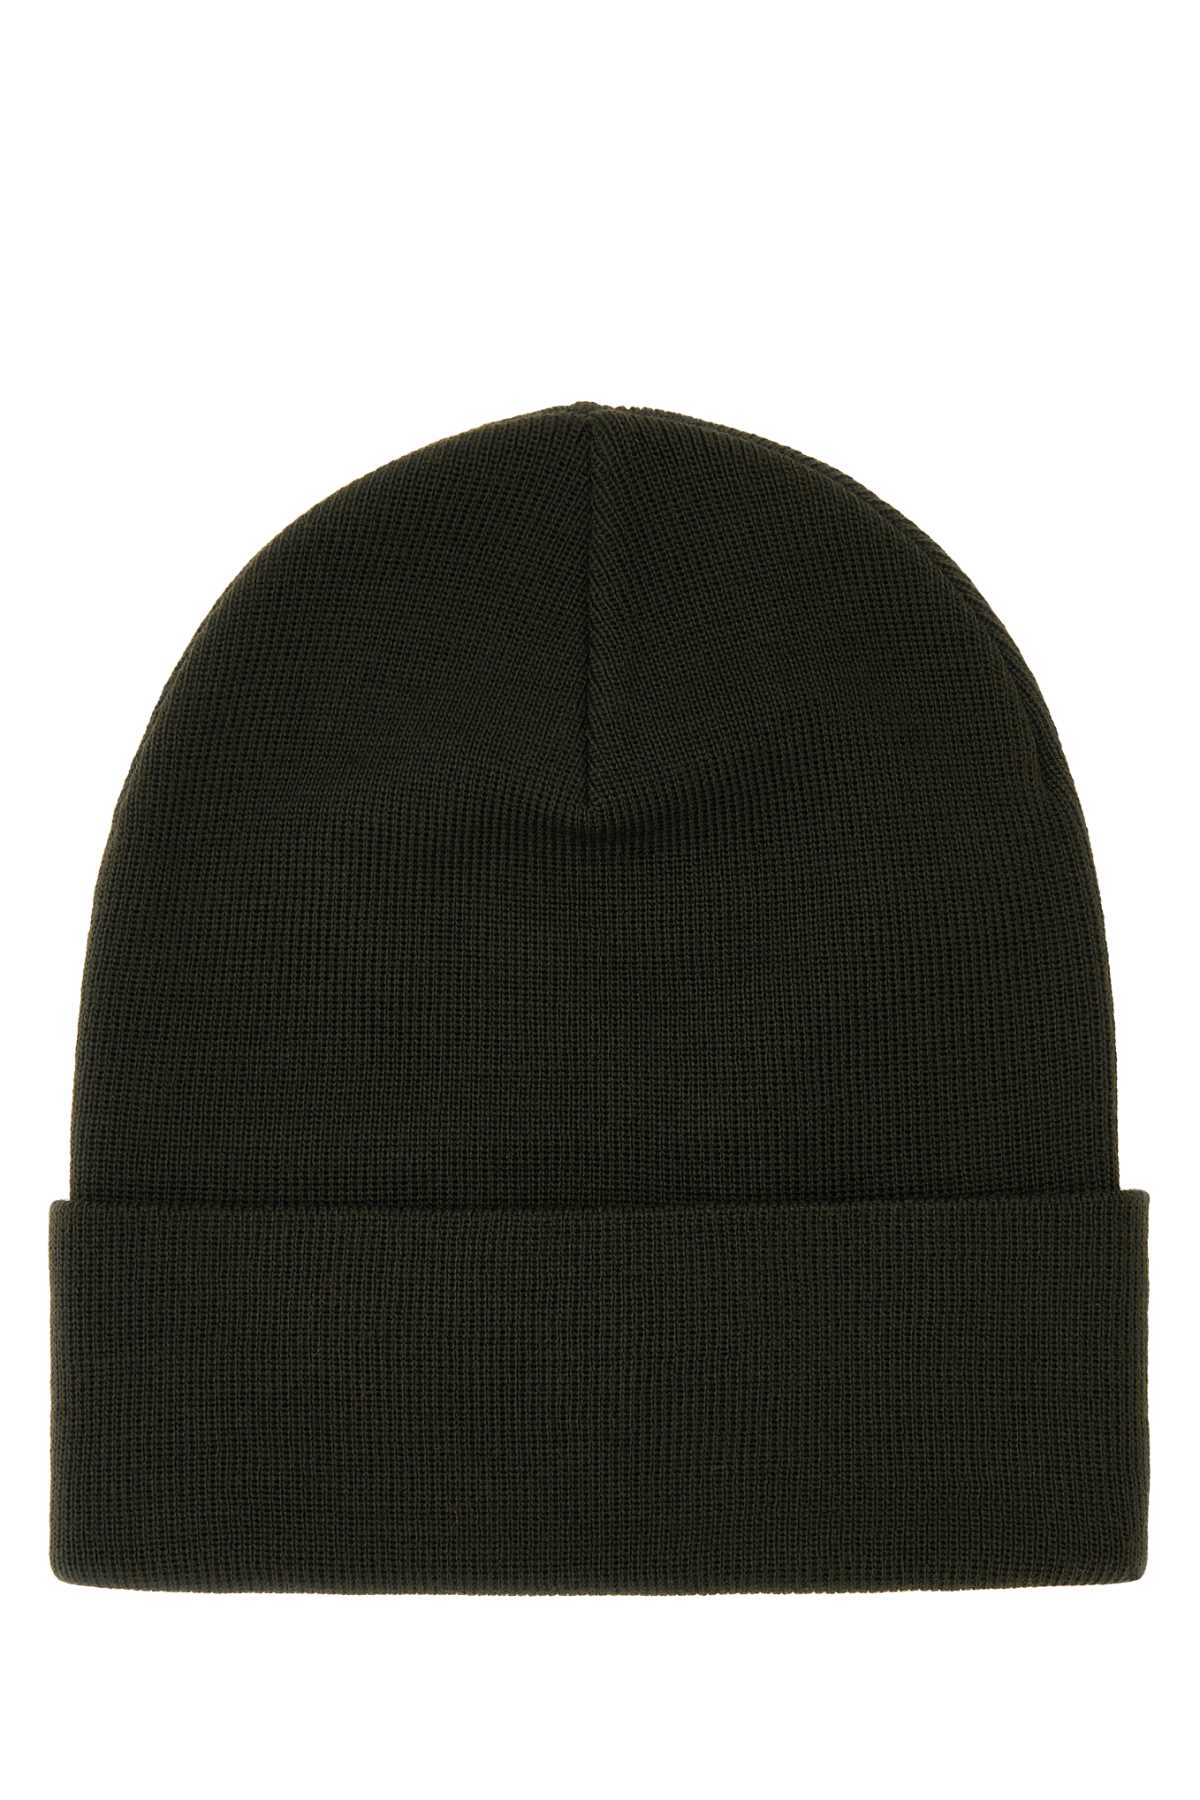 Moncler Khaki Wool Beanie Hat In 826